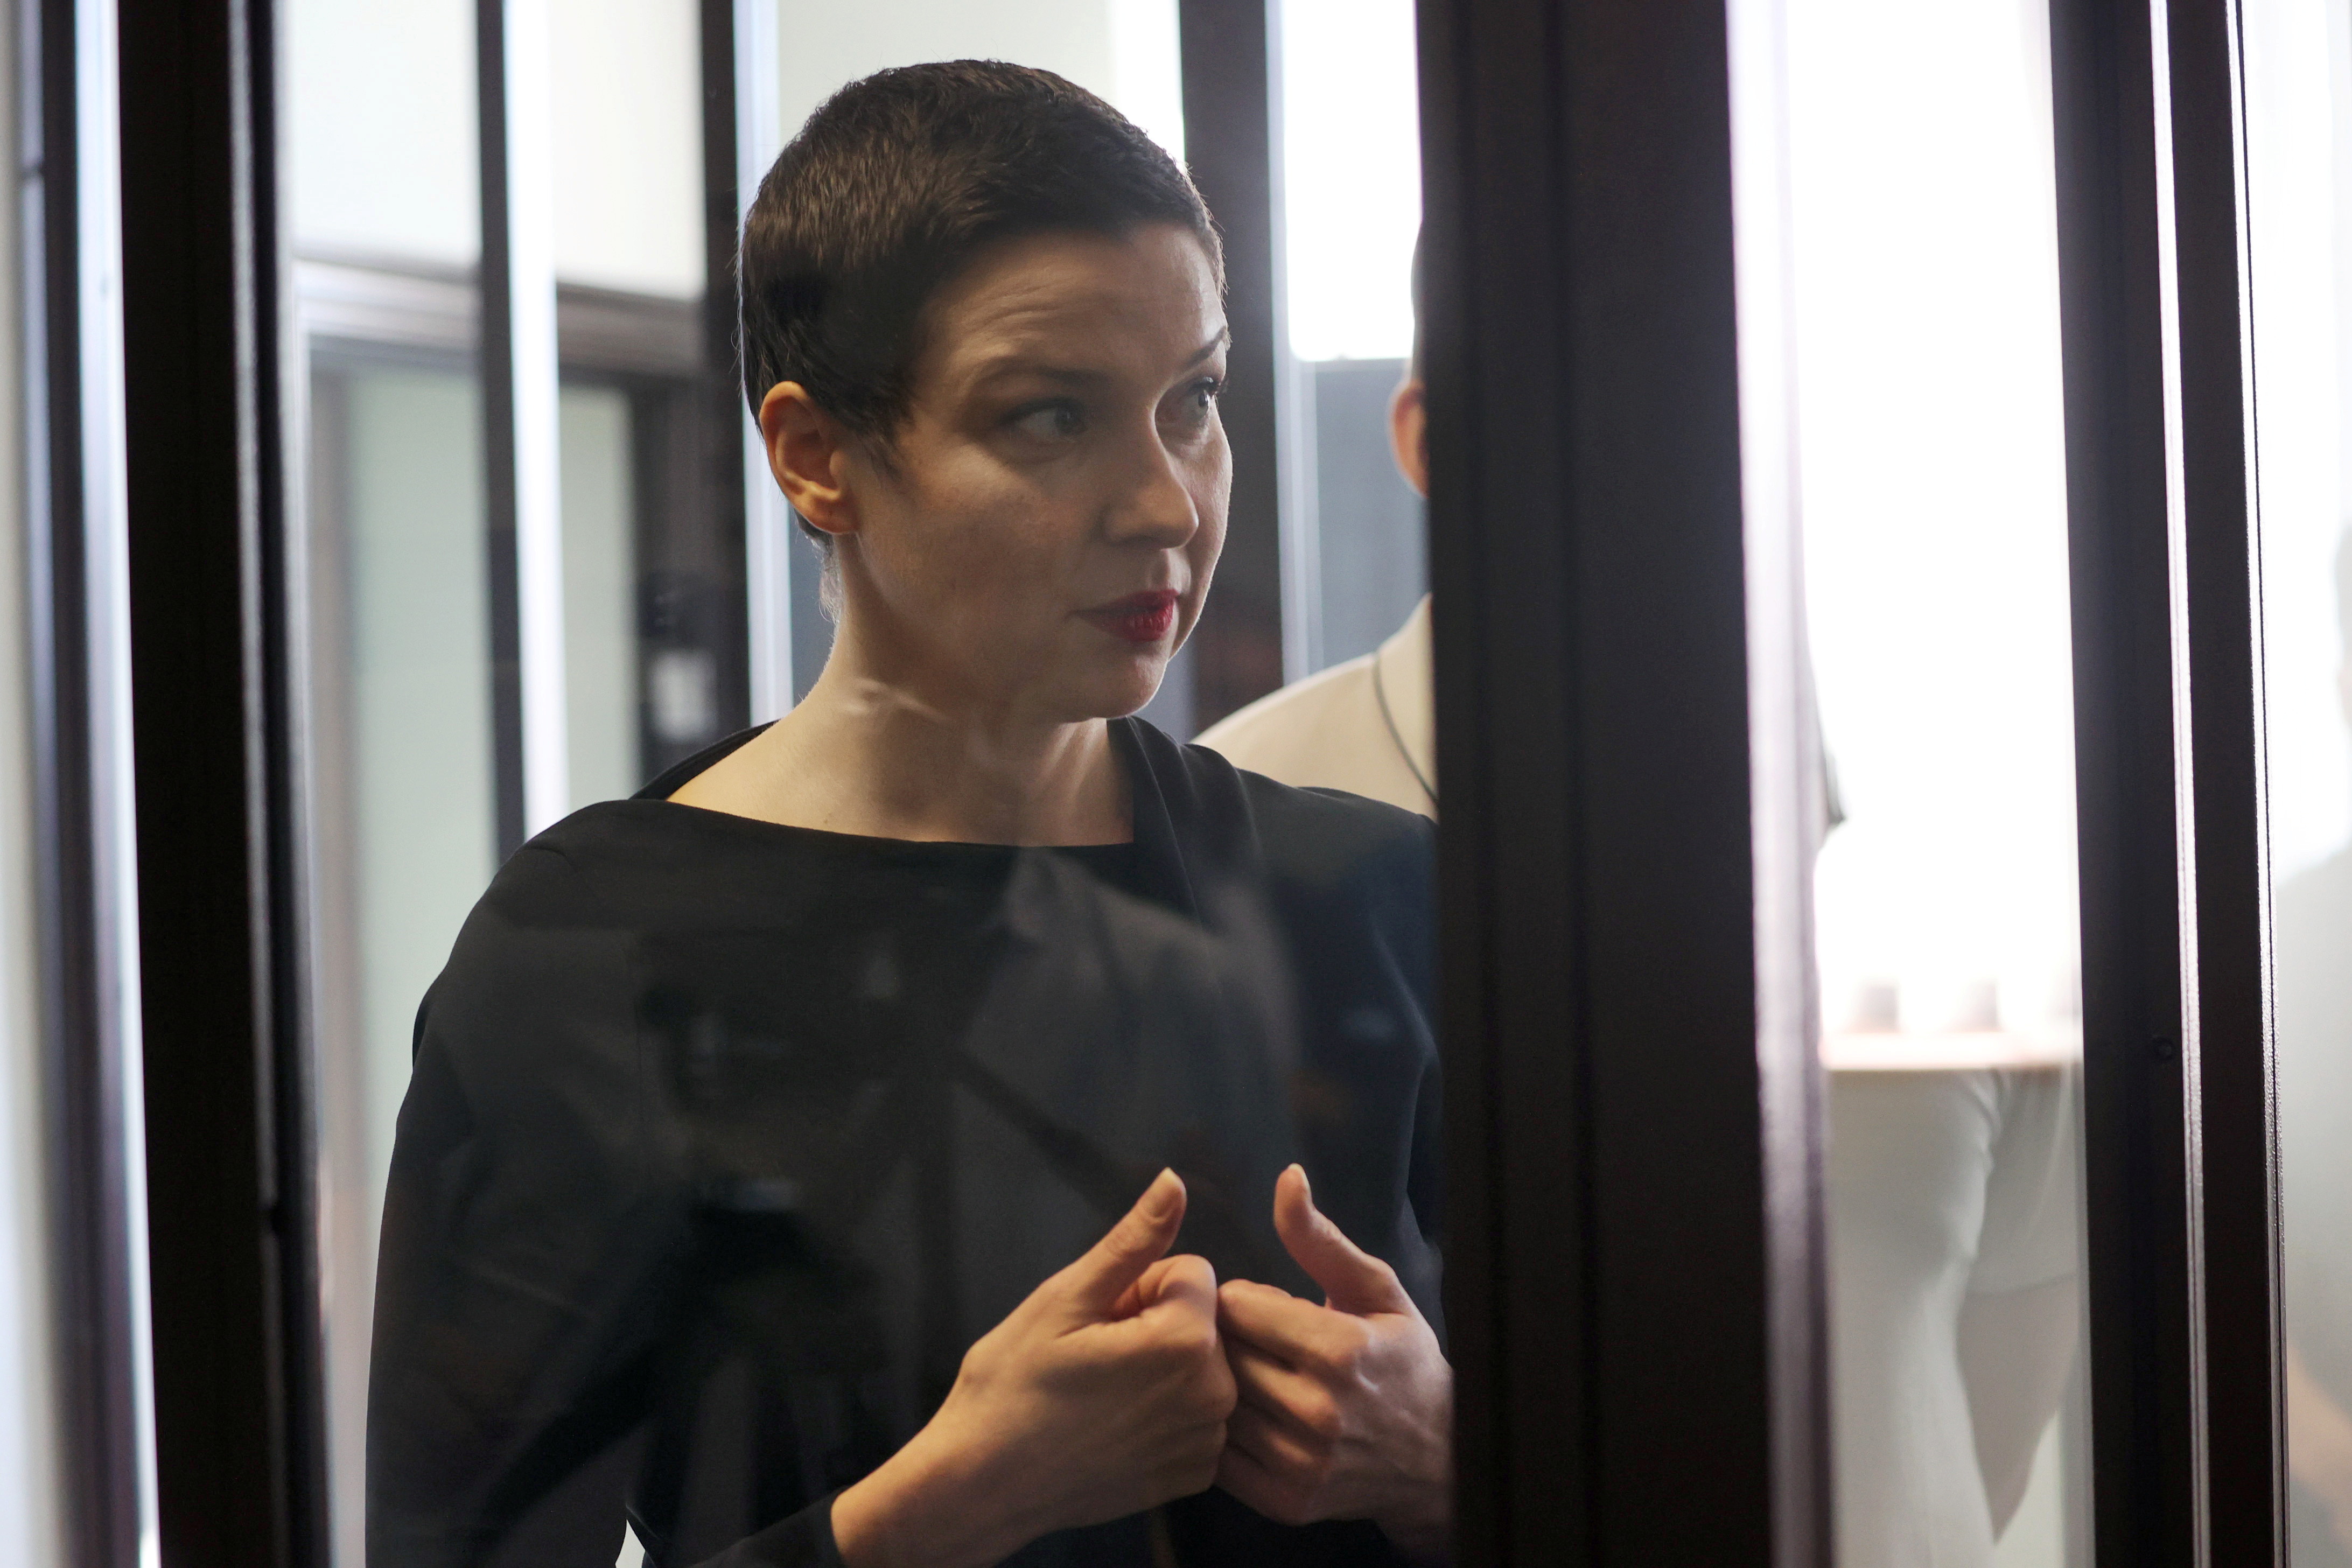 Belarusian opposition politician Maria Kolesnikova attends a court hearing in Minsk